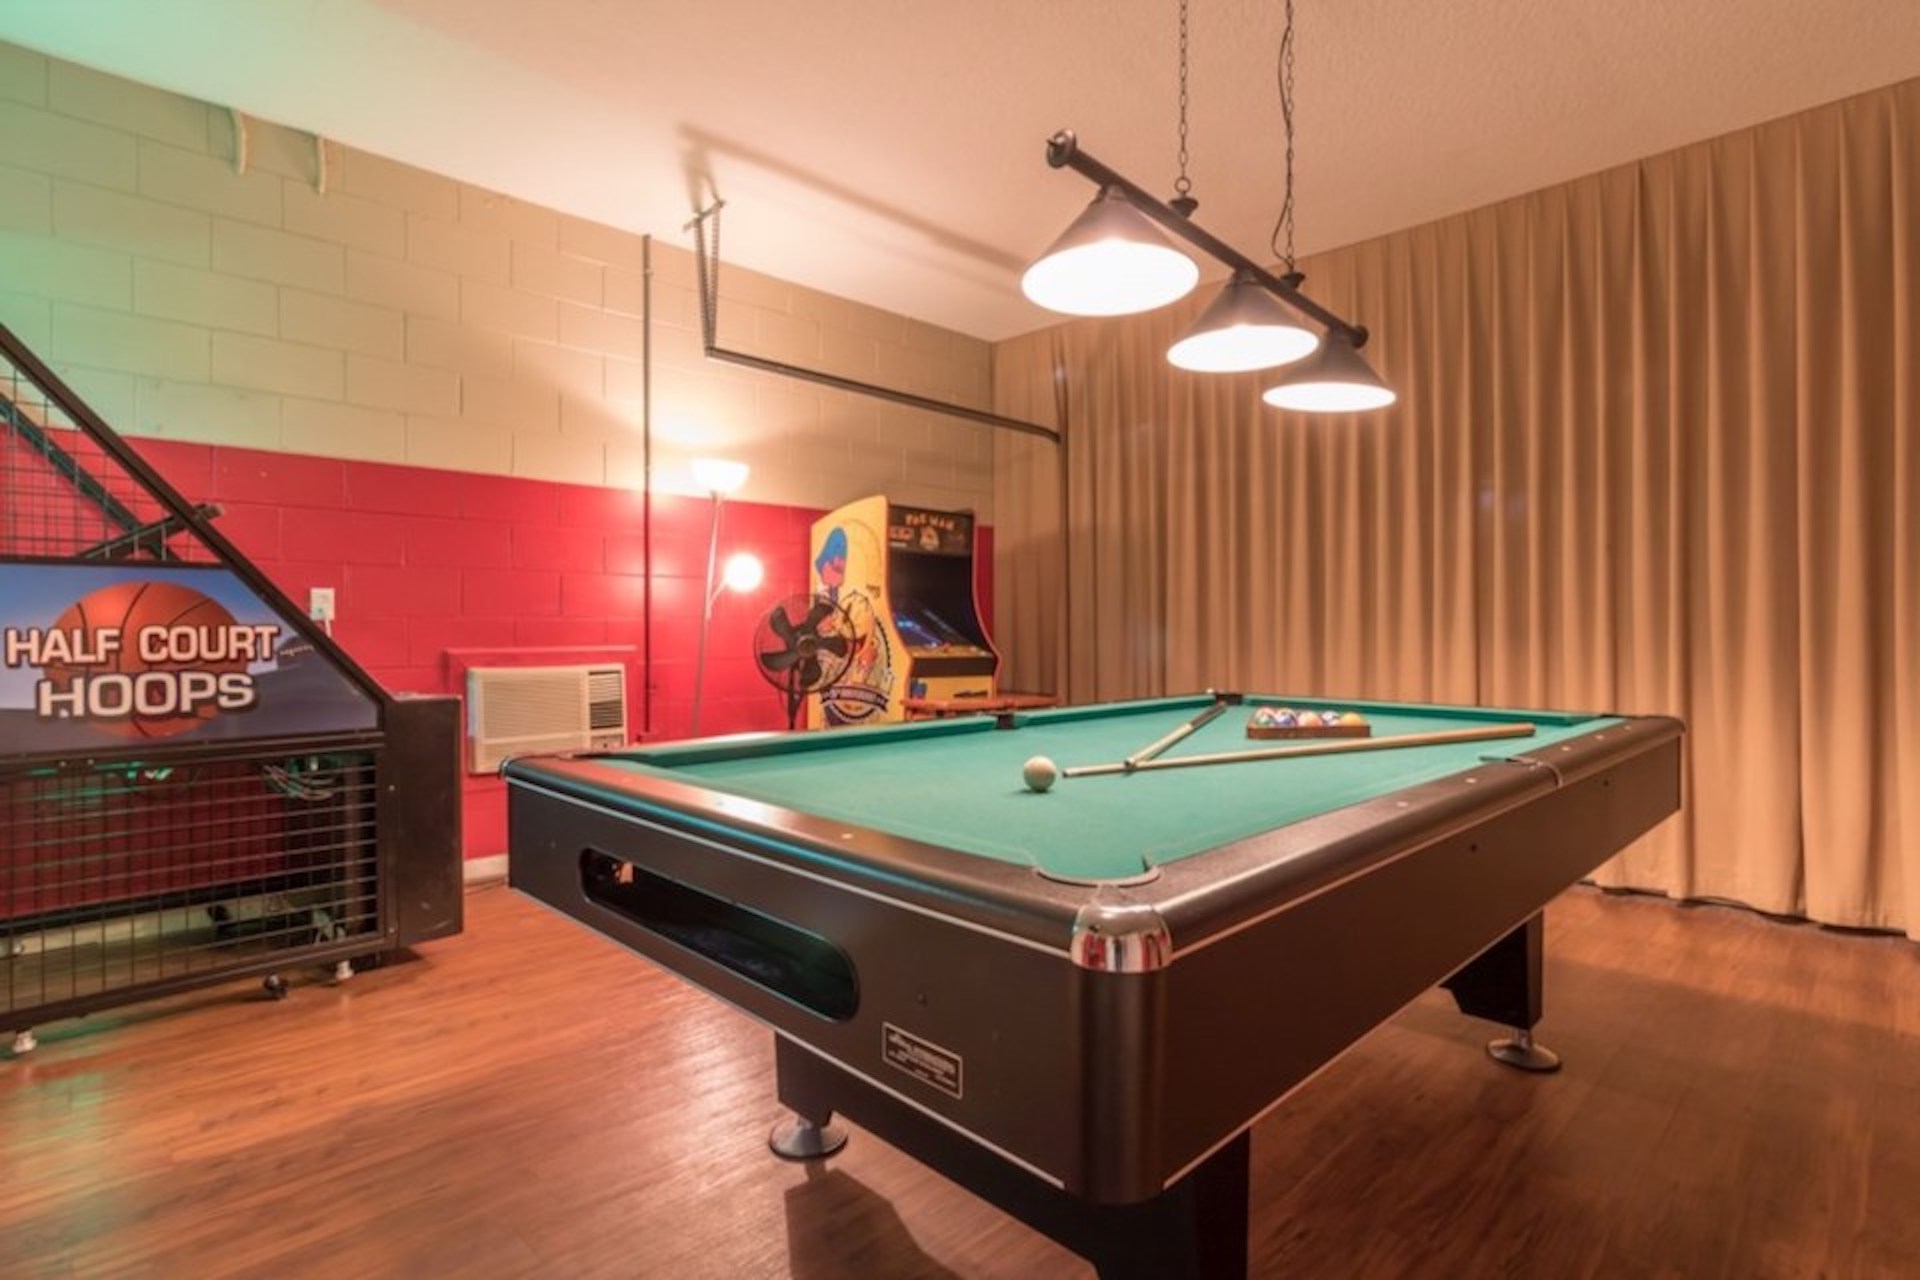 6 bedroom orlando vacation pool home gameroom